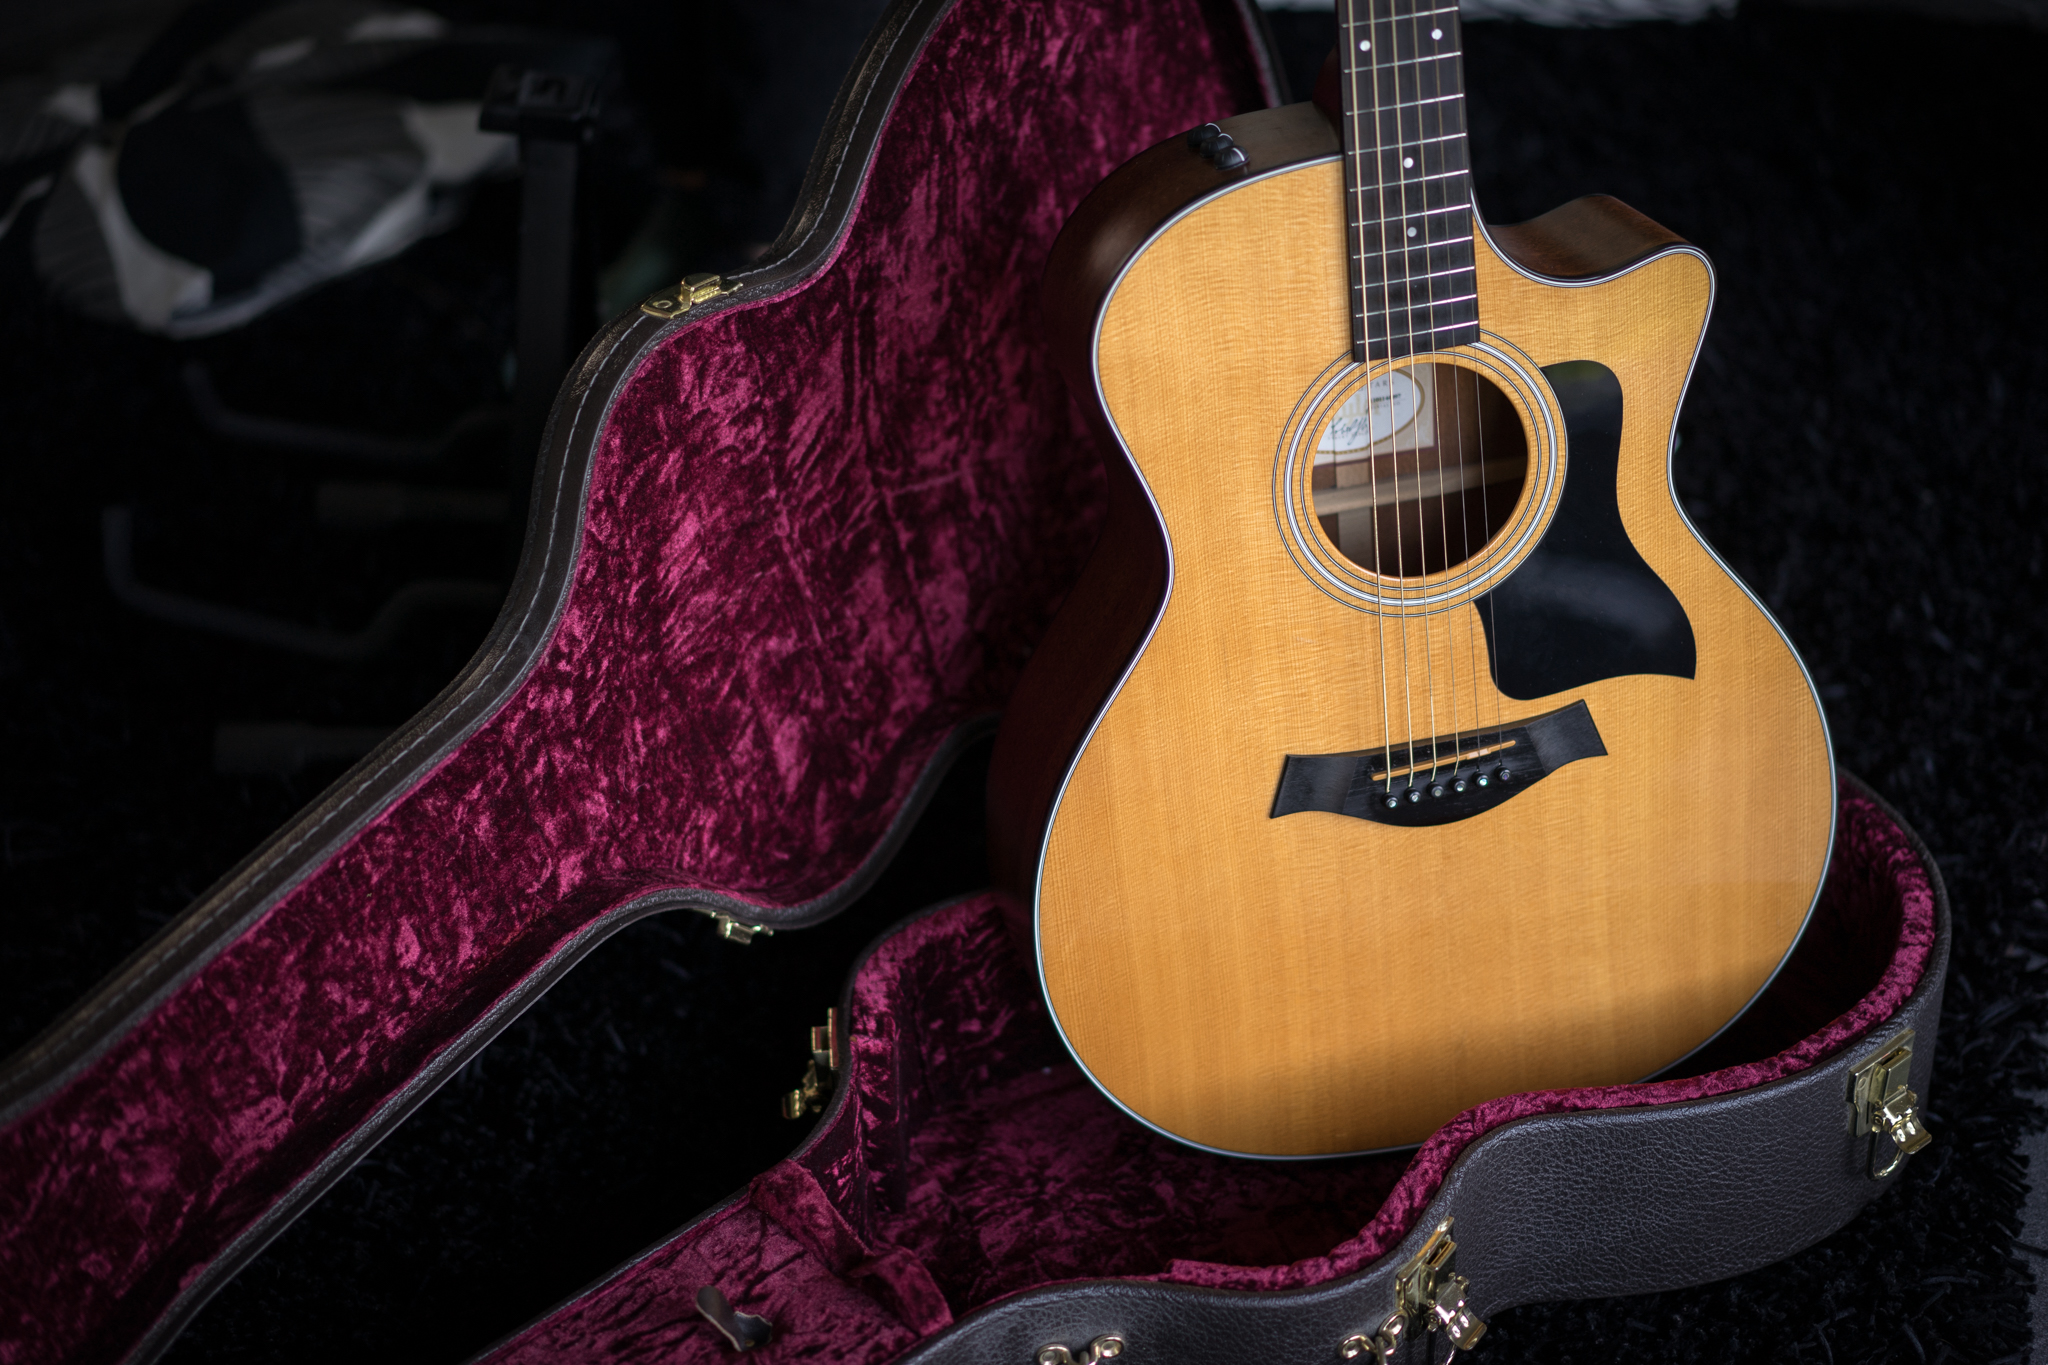 Taylor Guitars 314CE Akustikgitarre im Taylor Gitarrenkoffer mit rotem Samt. Foto von Julius Haring.